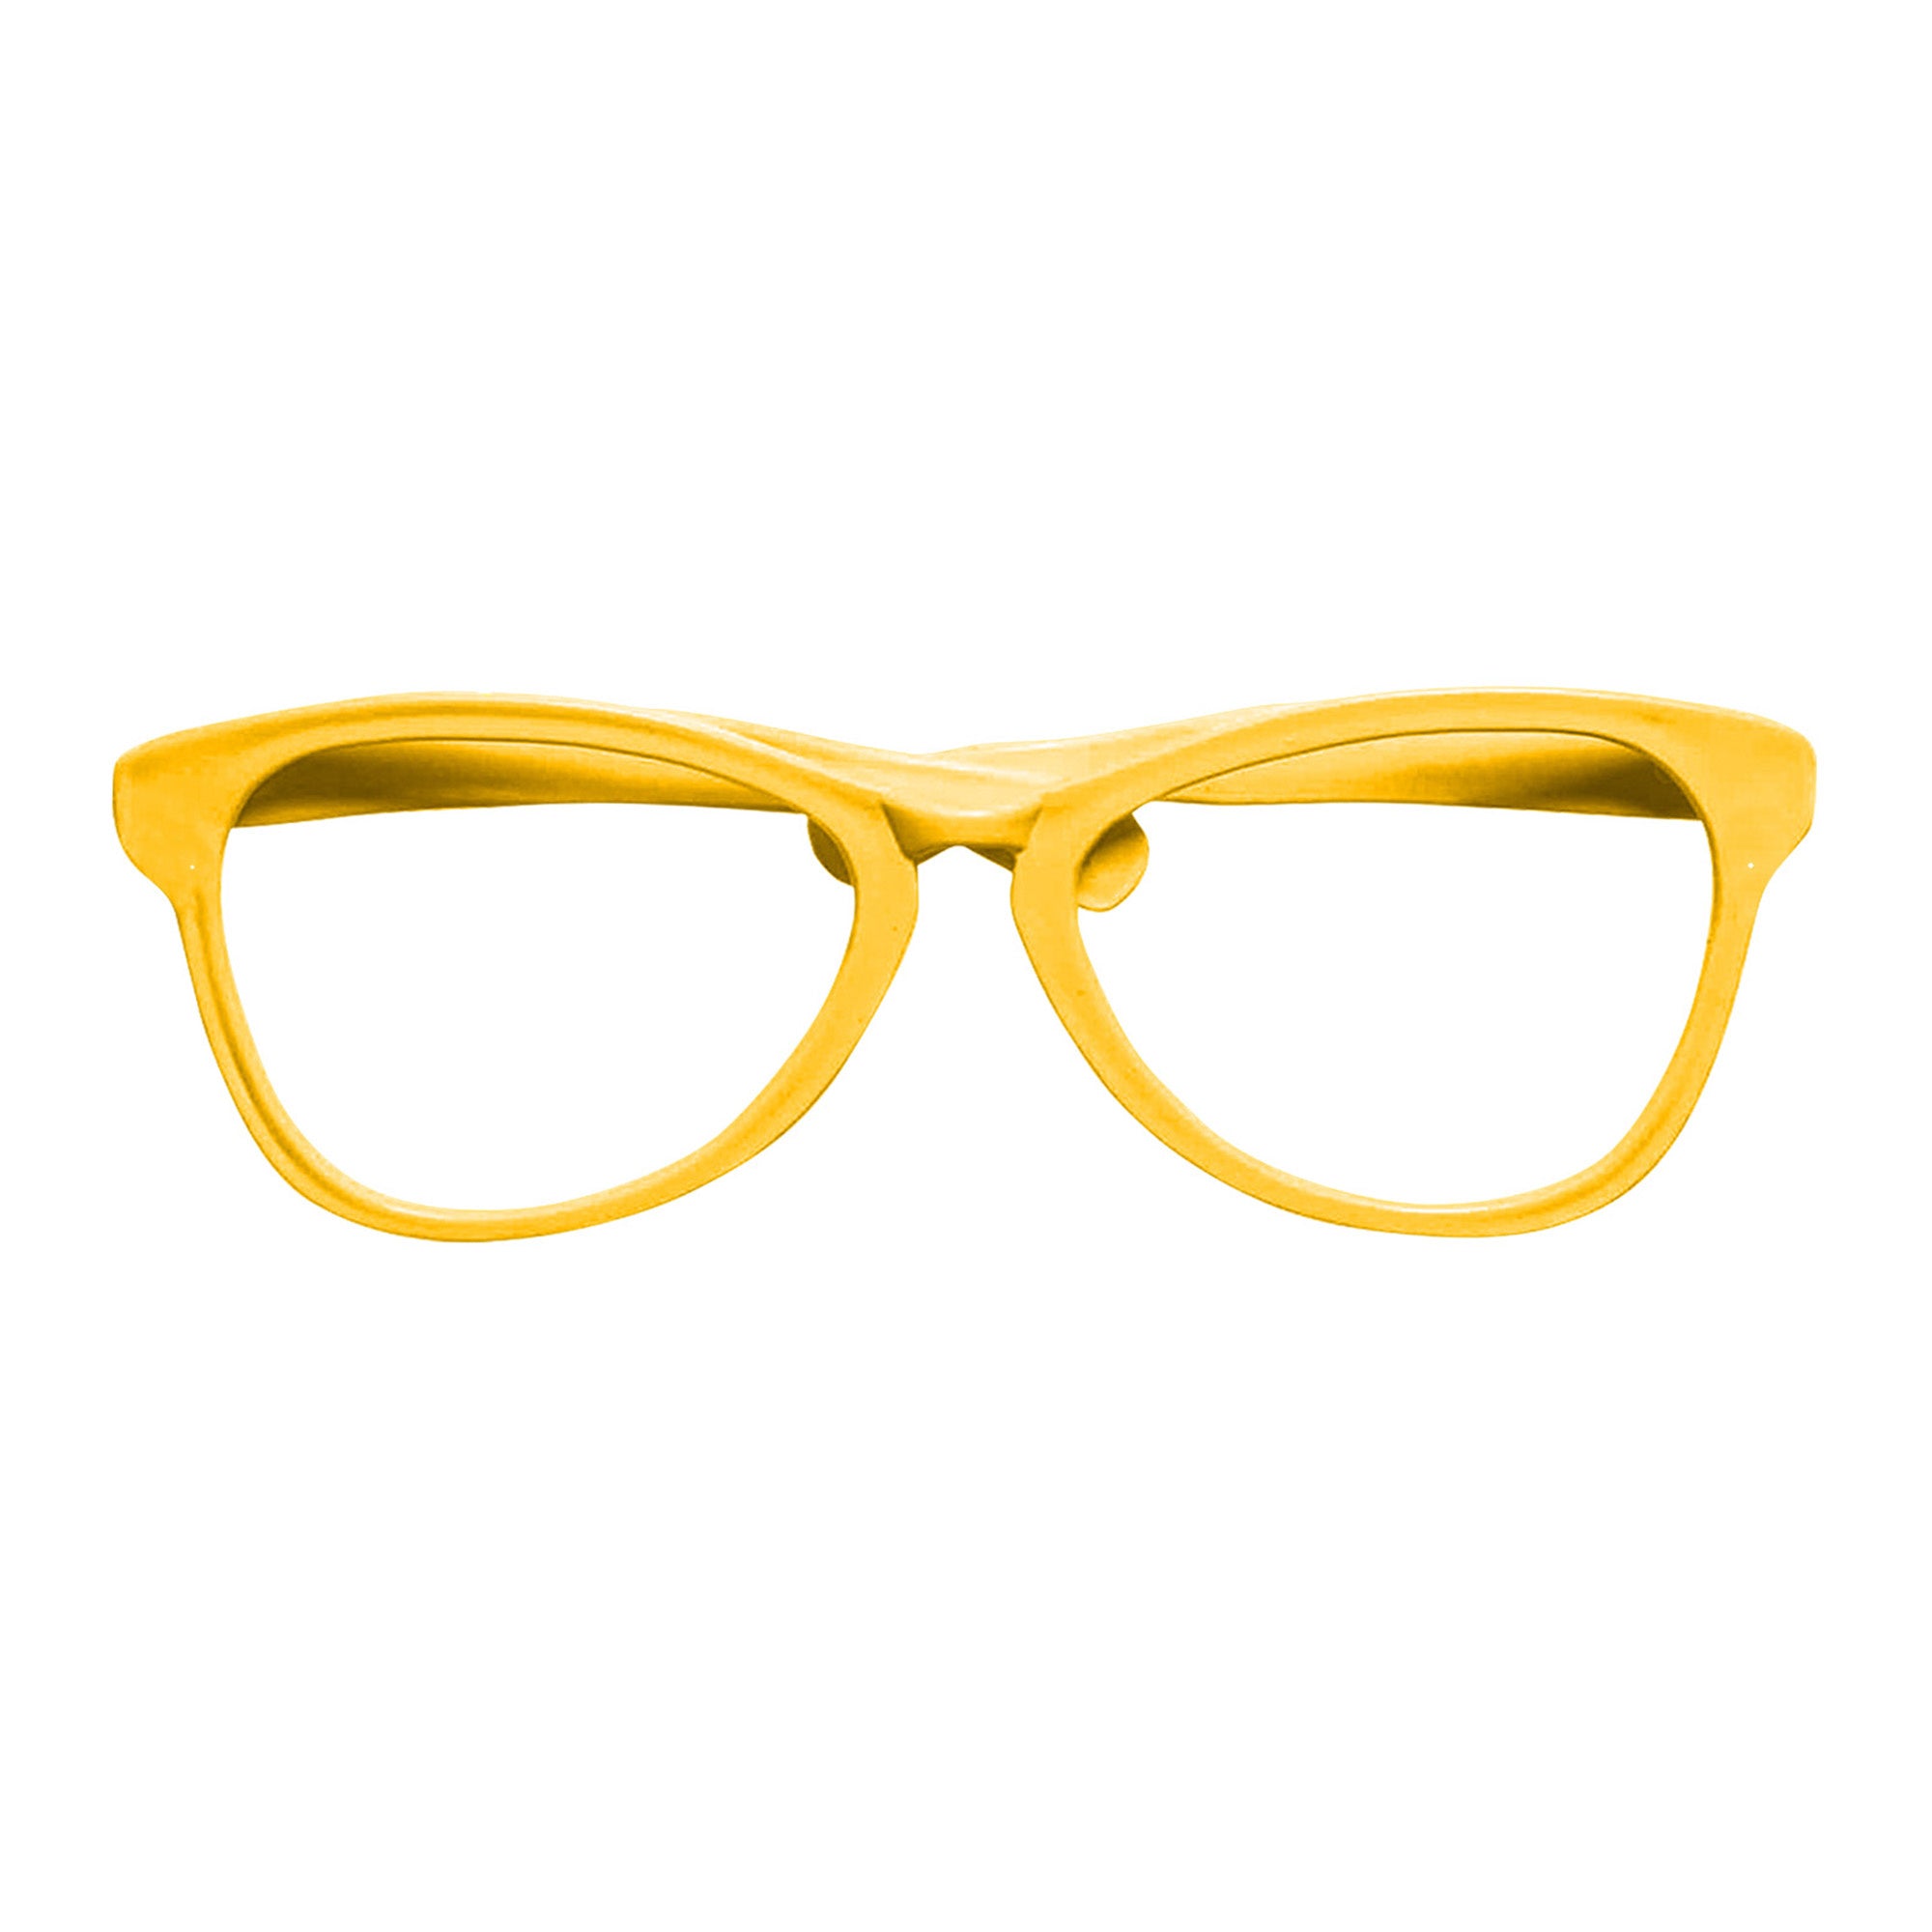 Gele clownsbril